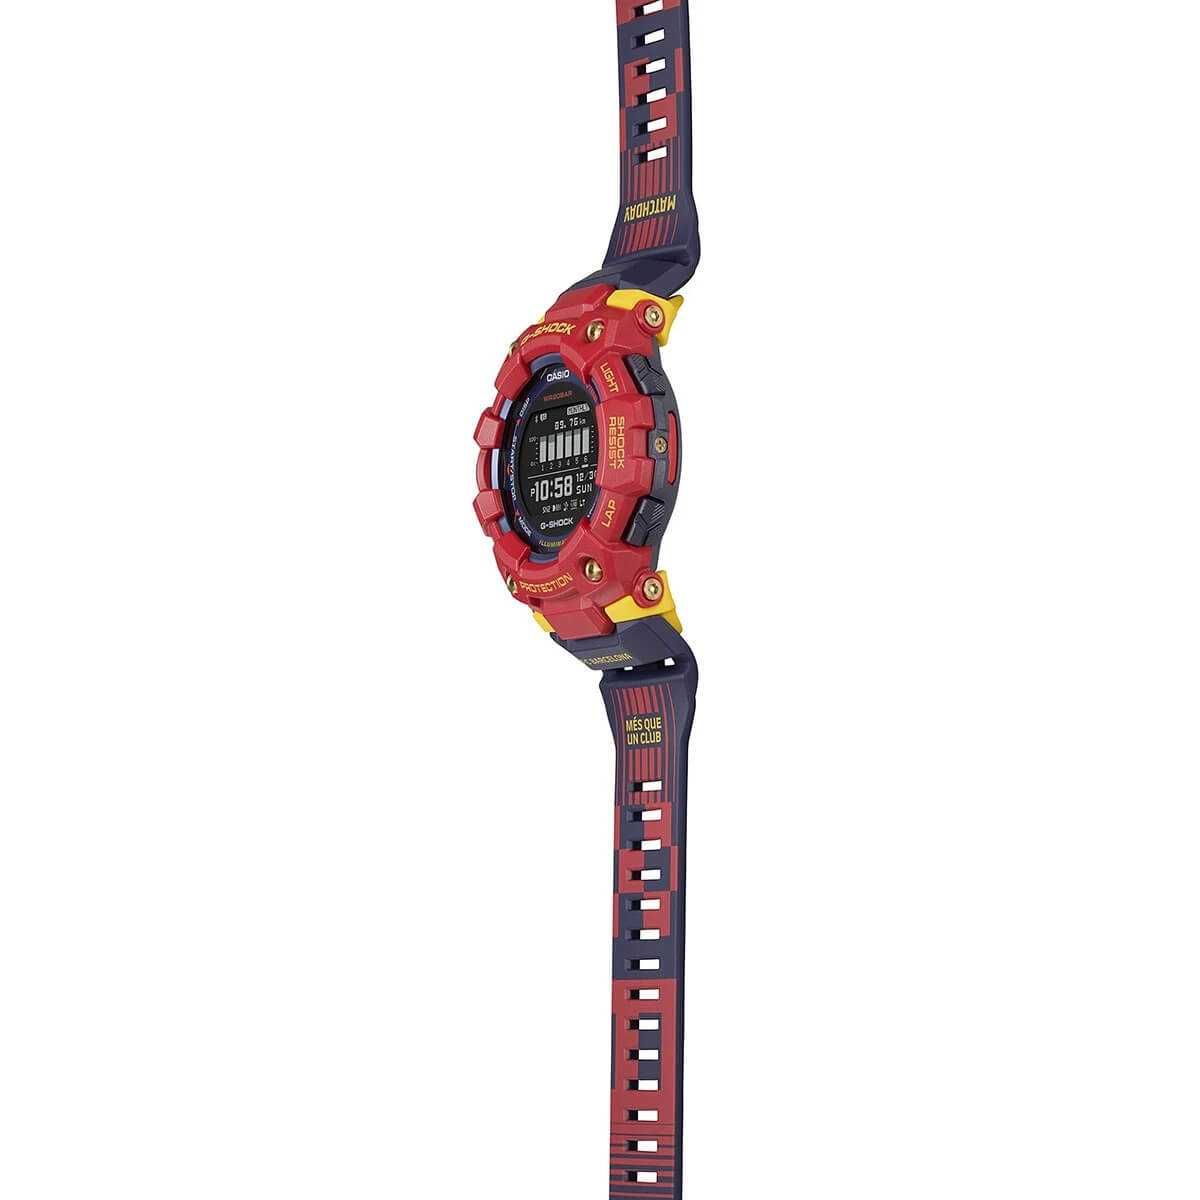 Мъжки часовник Casio G-SHOCK FC Barcelona Limited GBD-H1000BAR-4ER